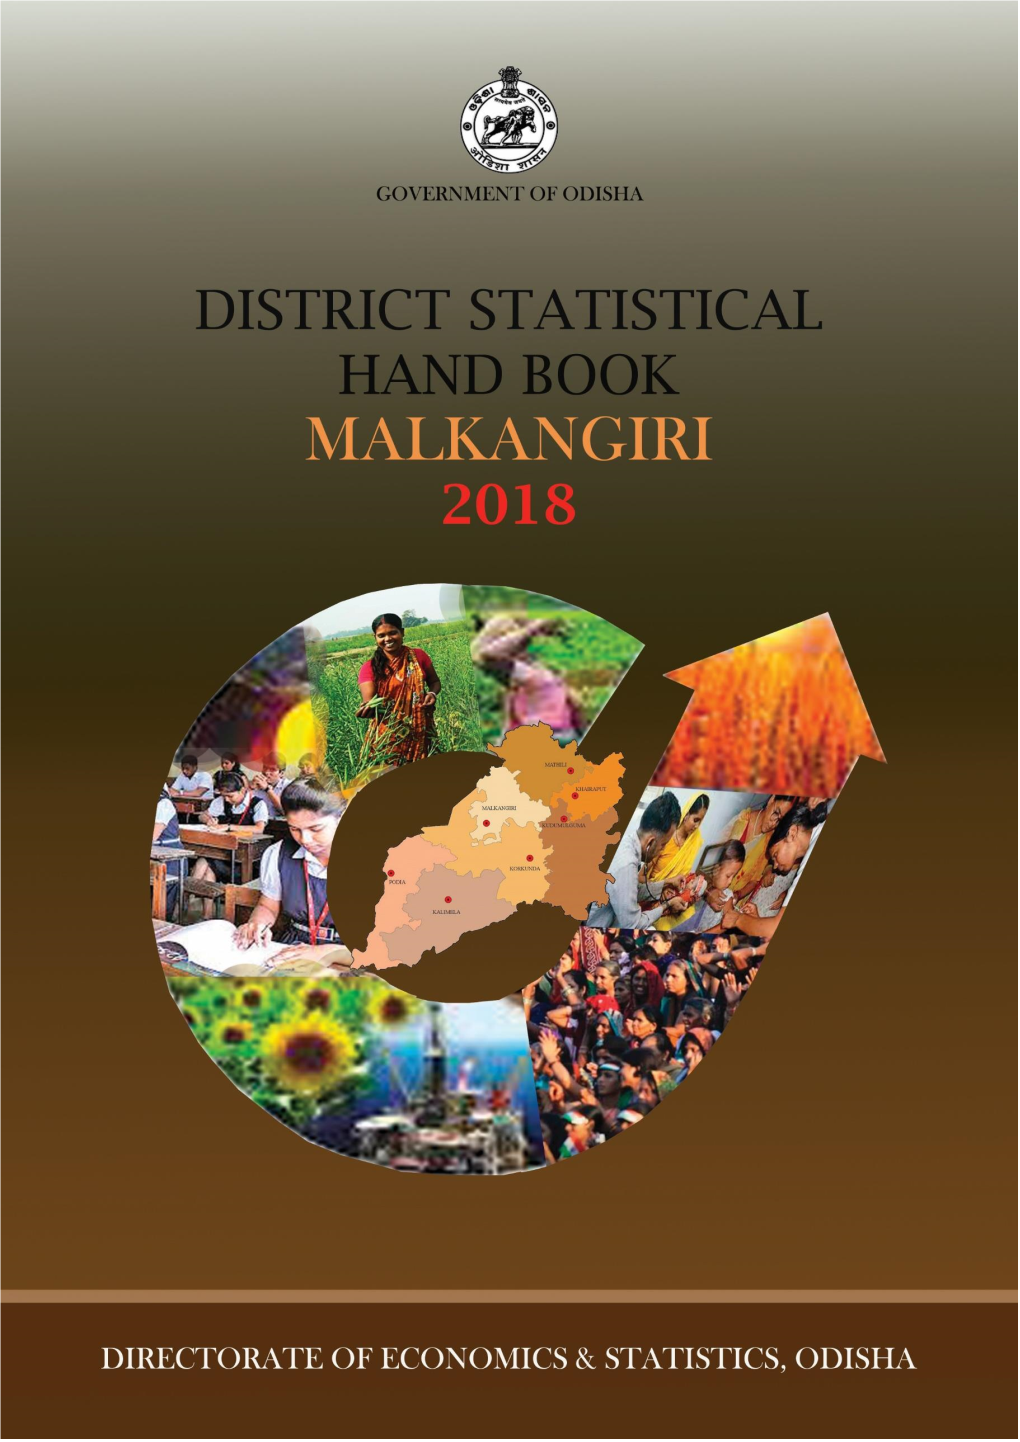 District Statistical Hand Book, Malkangiri, 2018